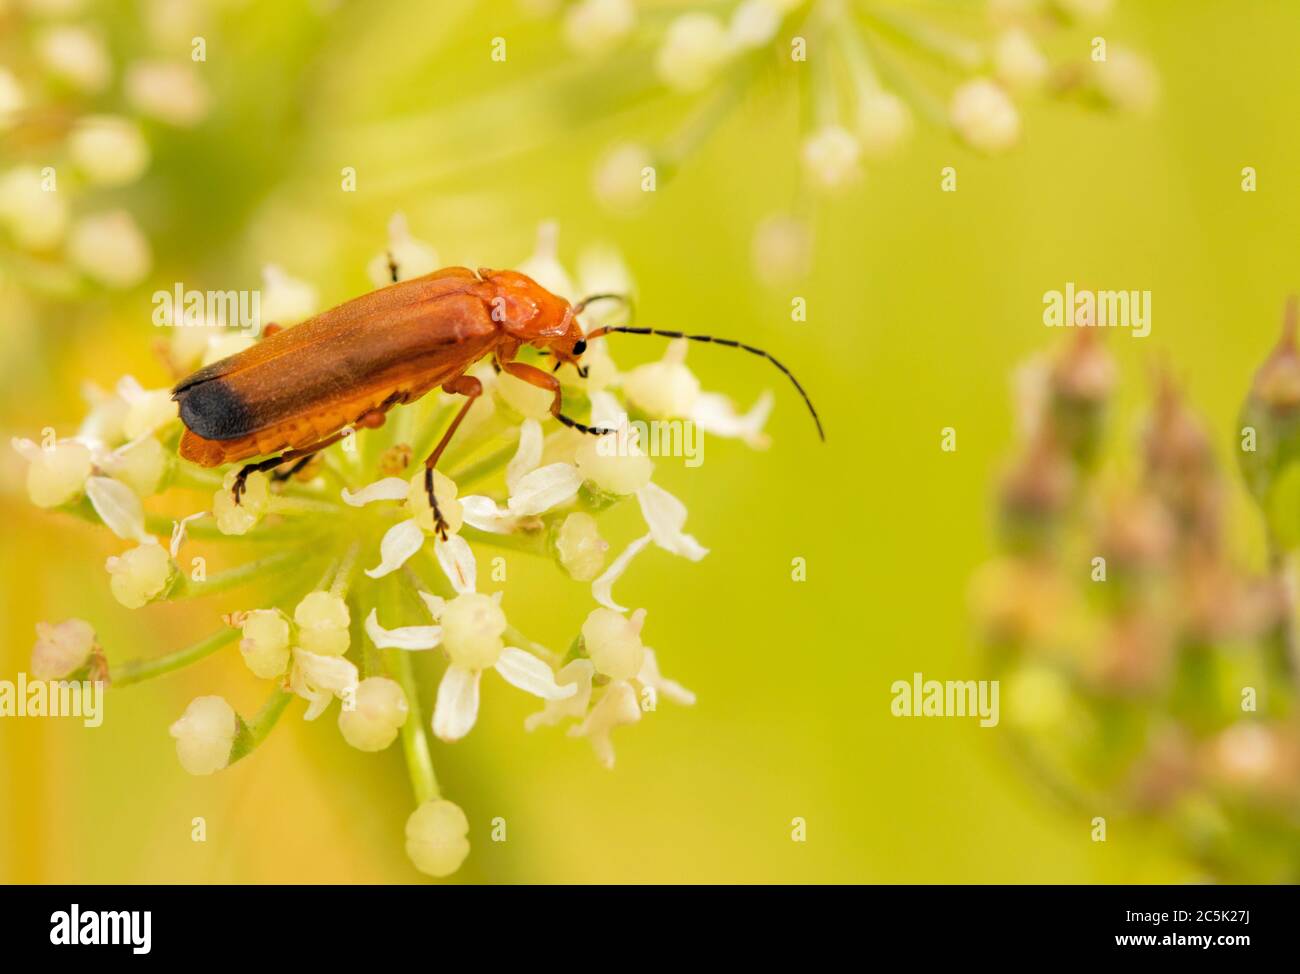 Common red soldier beetle, Rhagonycha fula, rhagonycha, sitting on a flower in the British countryside, July 2020 Stock Photo